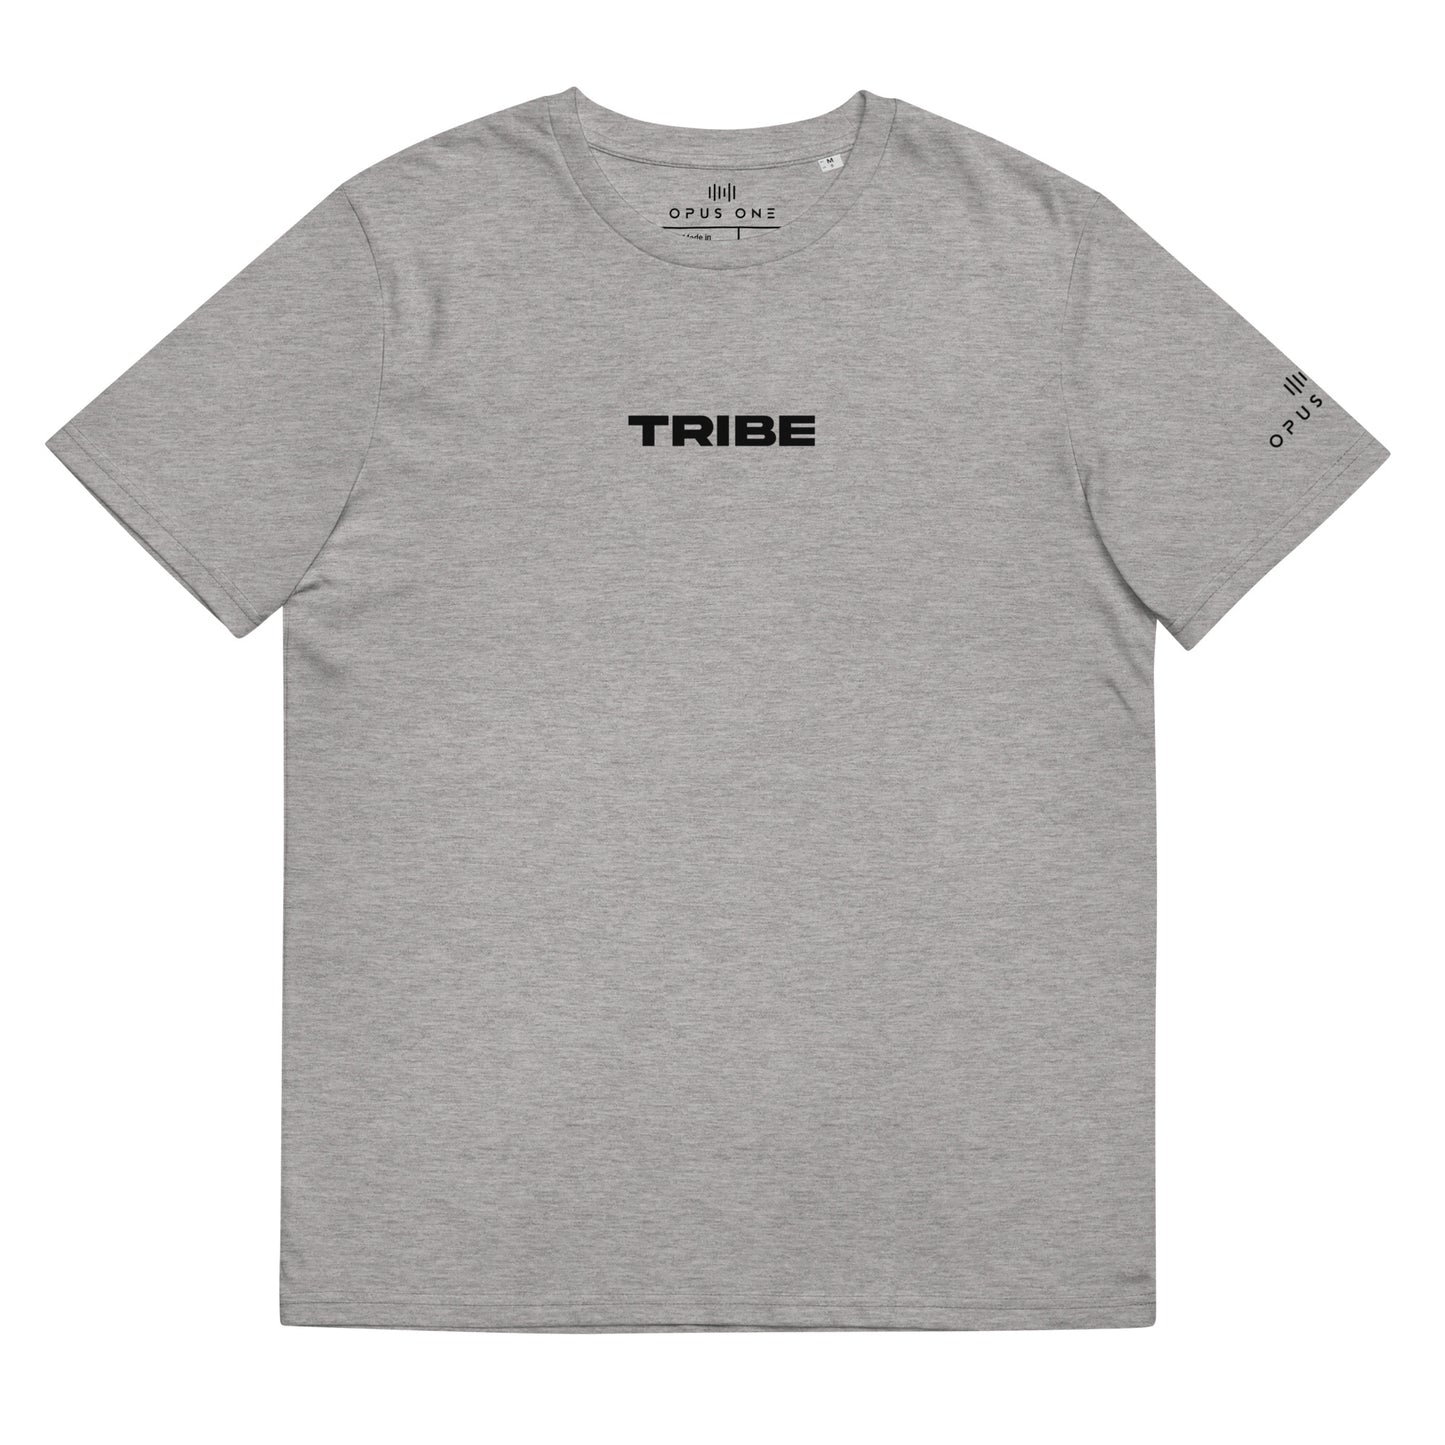 Tribe (v13) Unisex organic cotton t-shirt (Black Text)